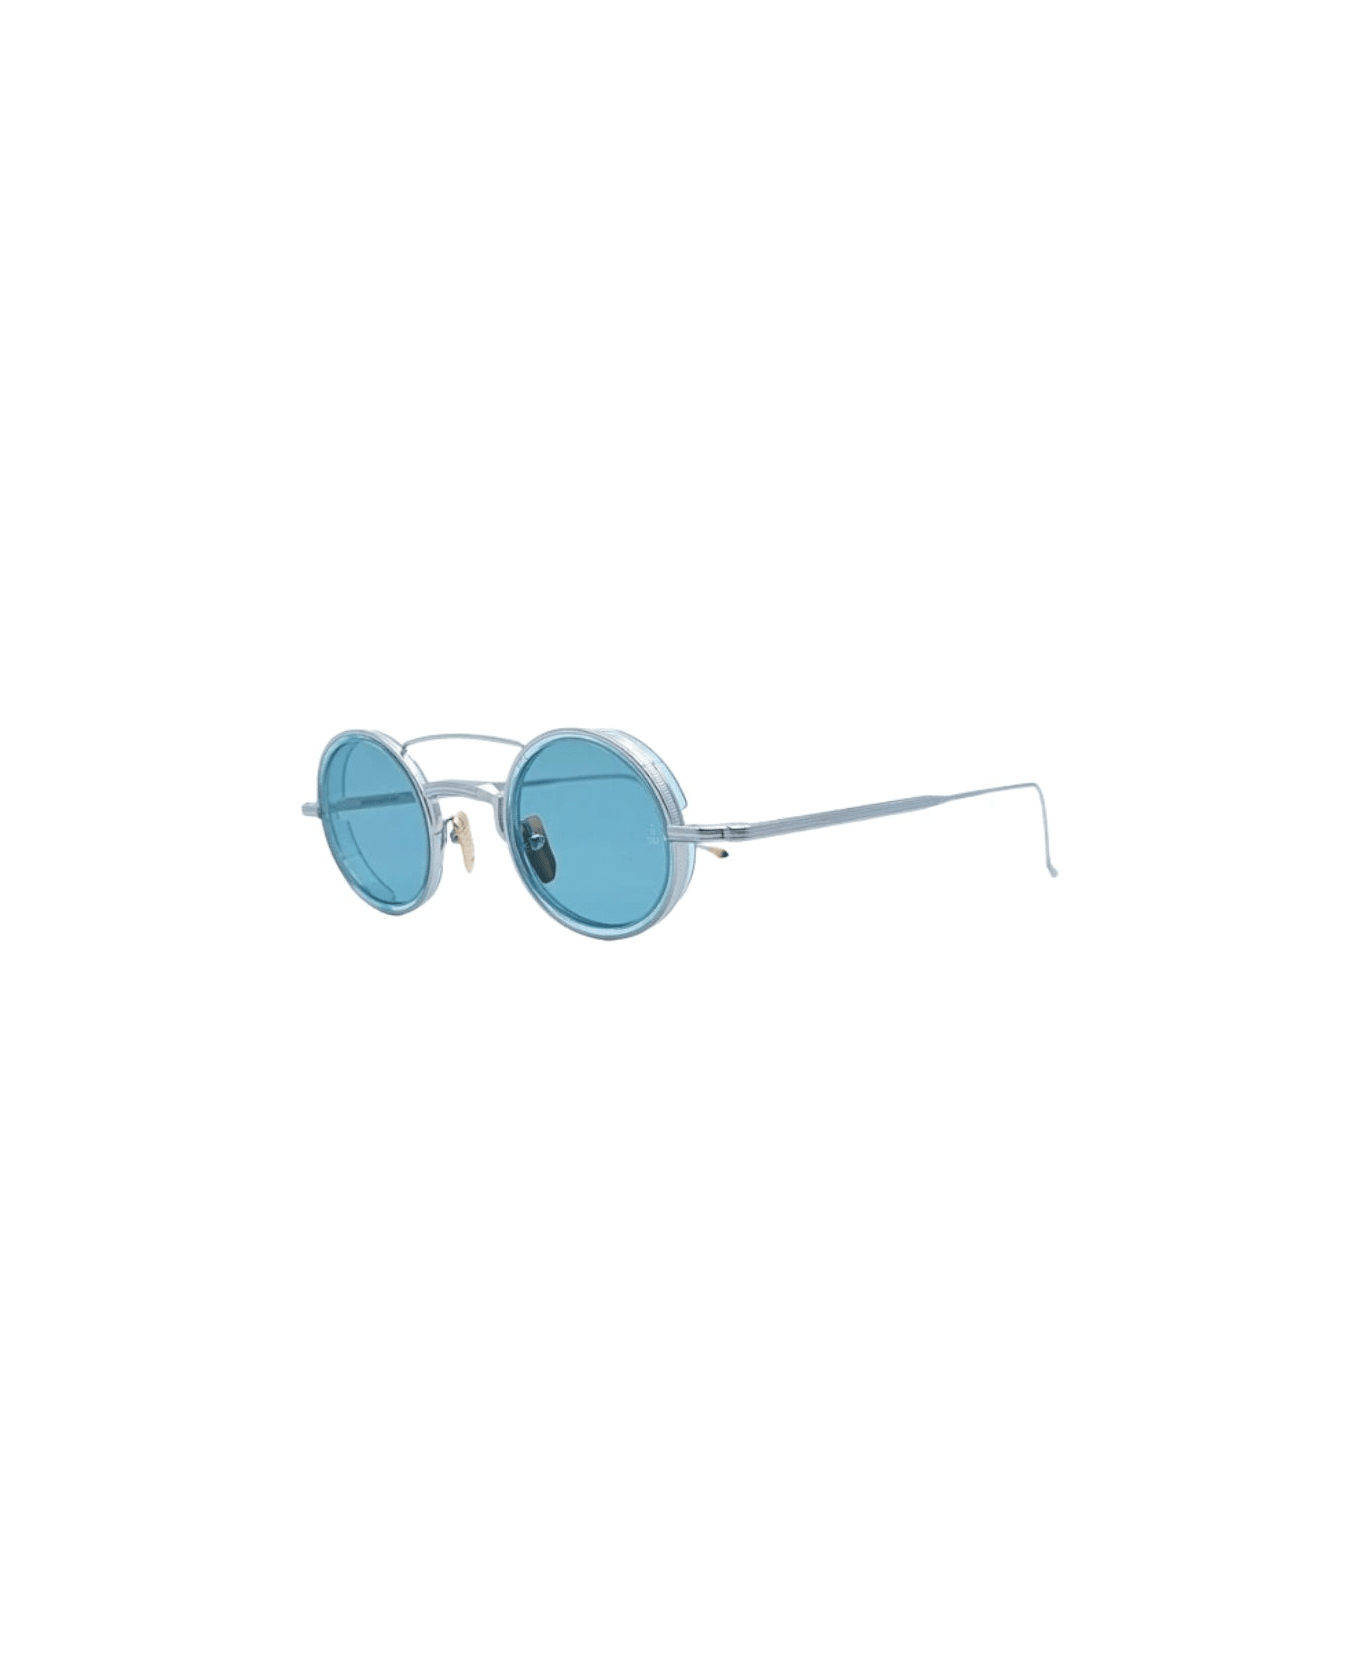 Jacques Marie Mage Ringo Sunglasses サングラス